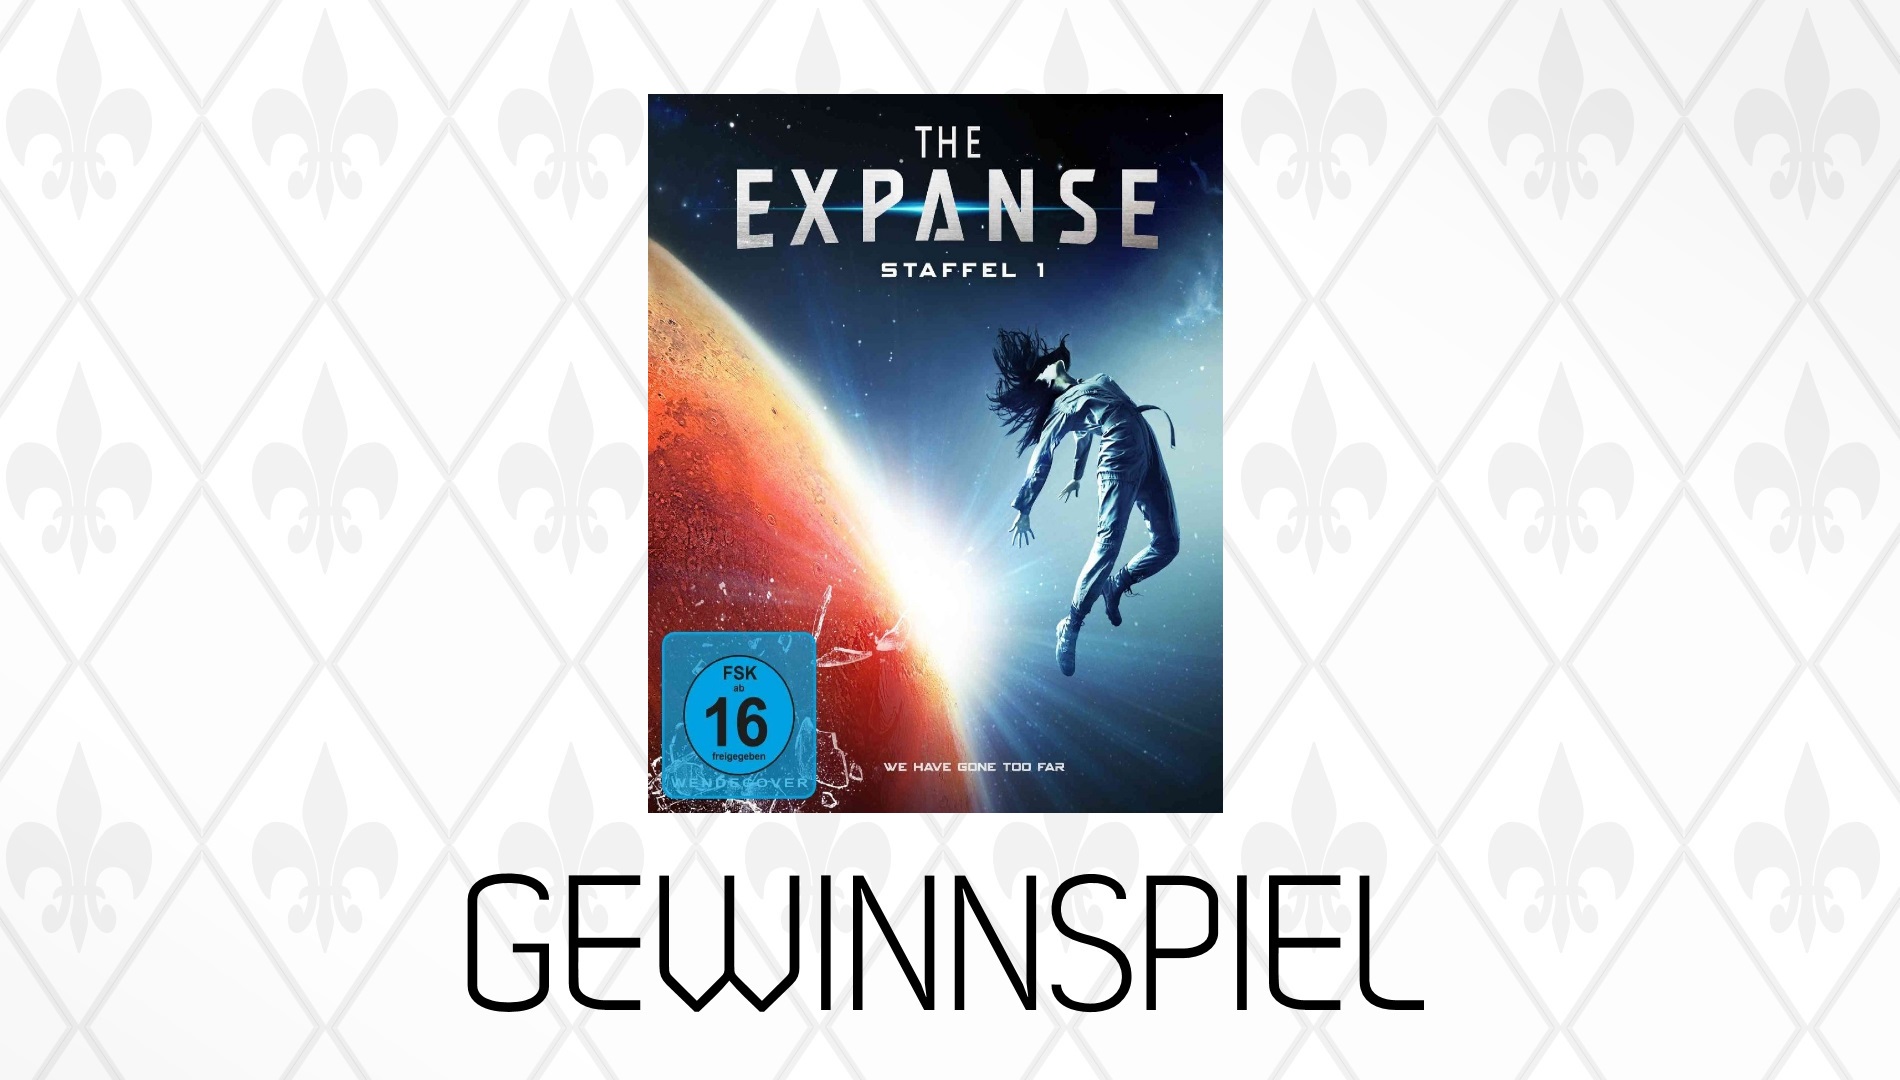 The Expanse: Staffel 1